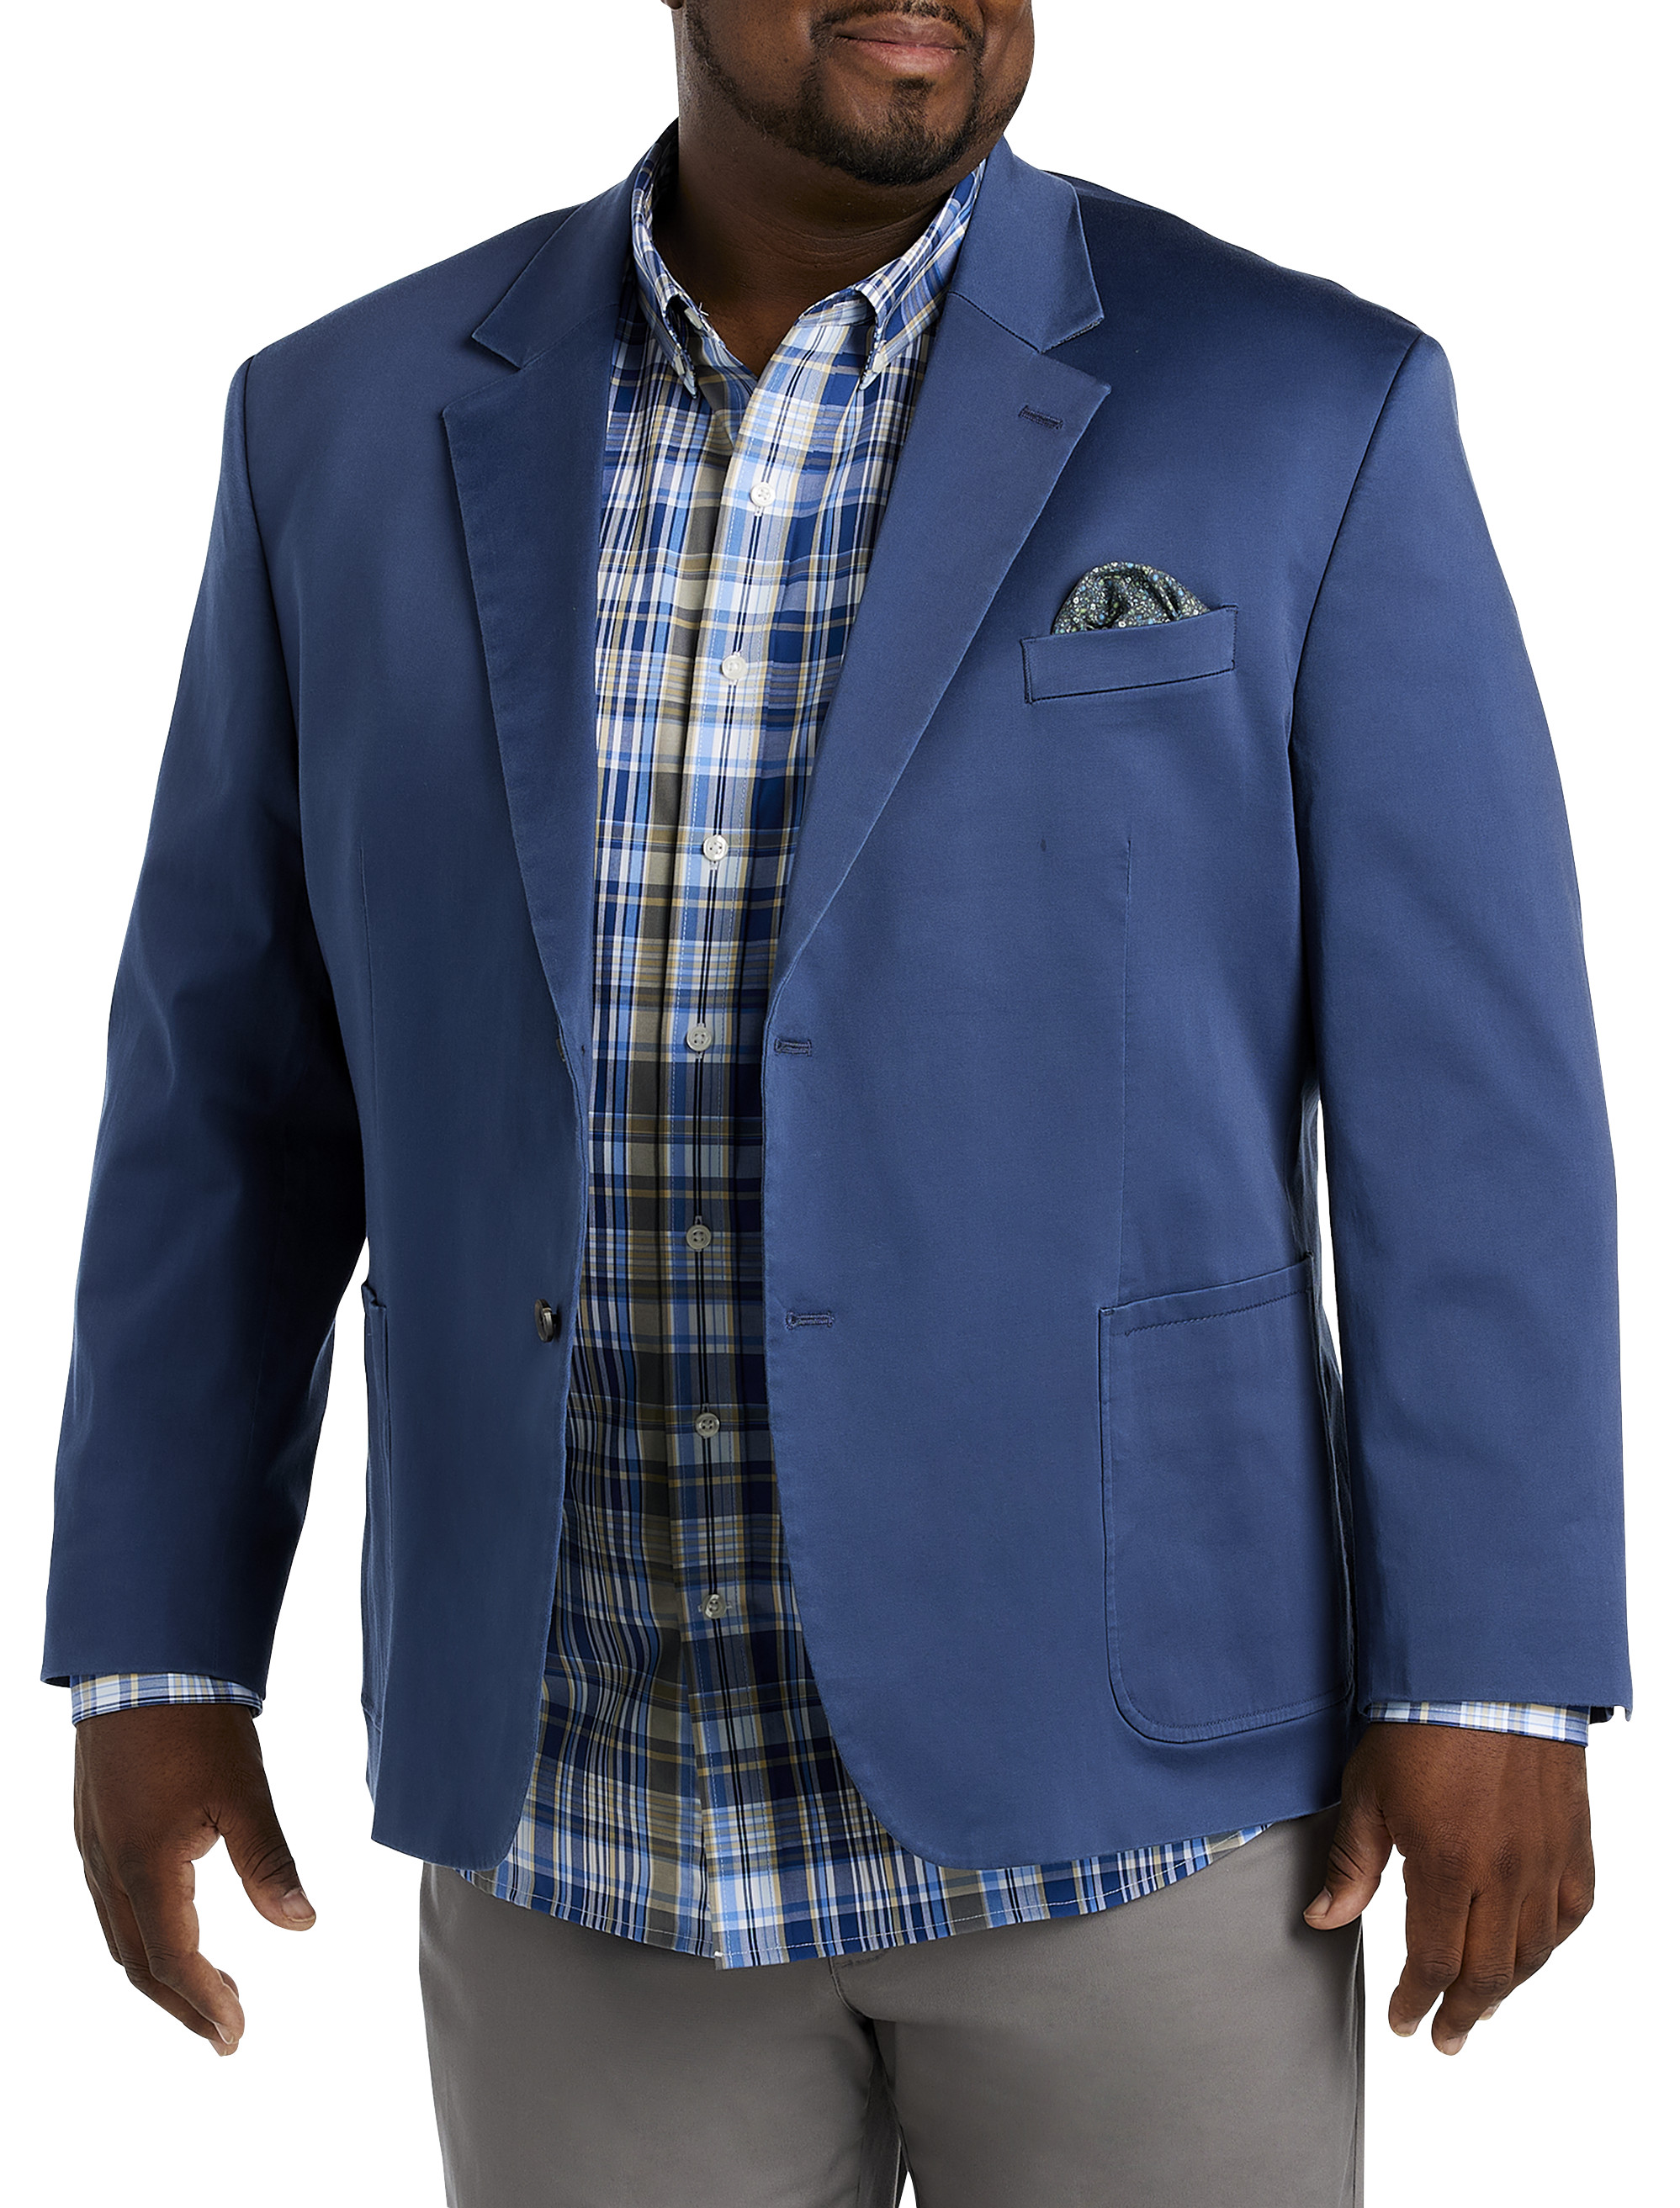 Men Louis Vuitton Uniforms Charcoal Grey Sports Coat Blazer Jacket